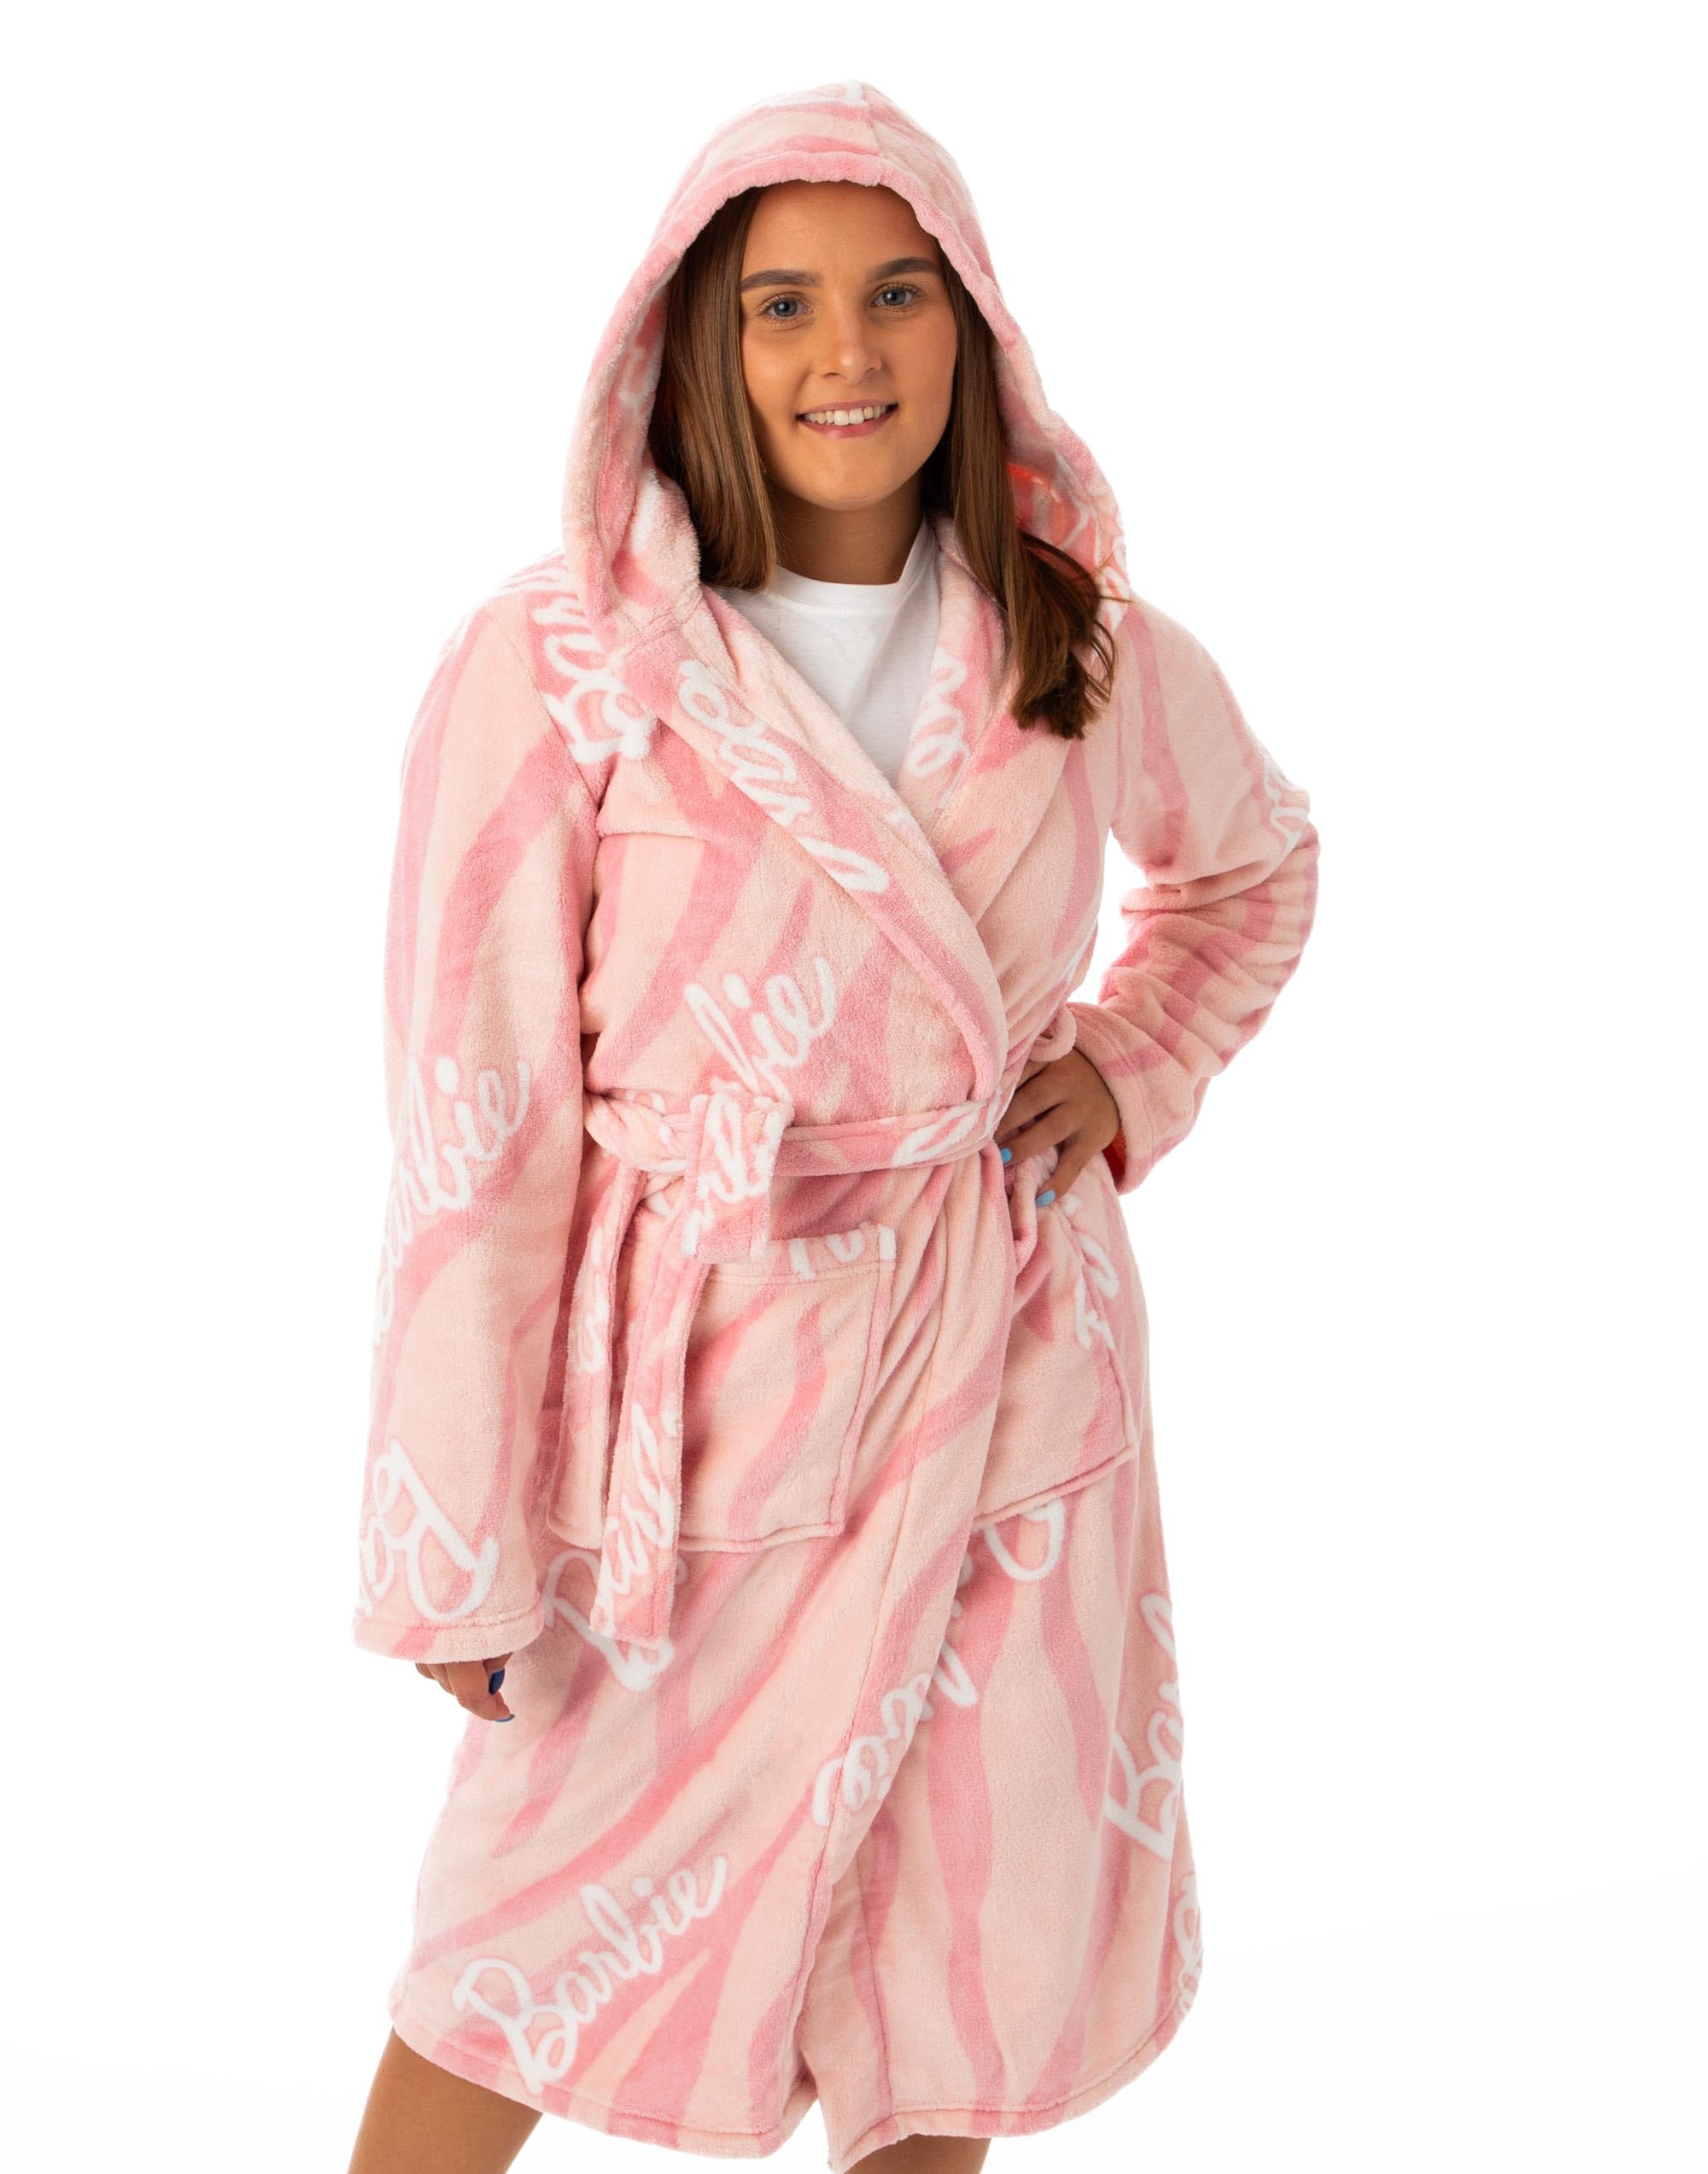 Barbie Womens Hooded Bathrobe | Ladies Pink All over Print Dressing Gown | Fashion Wave Print Fleece Loungewear Bathrobe